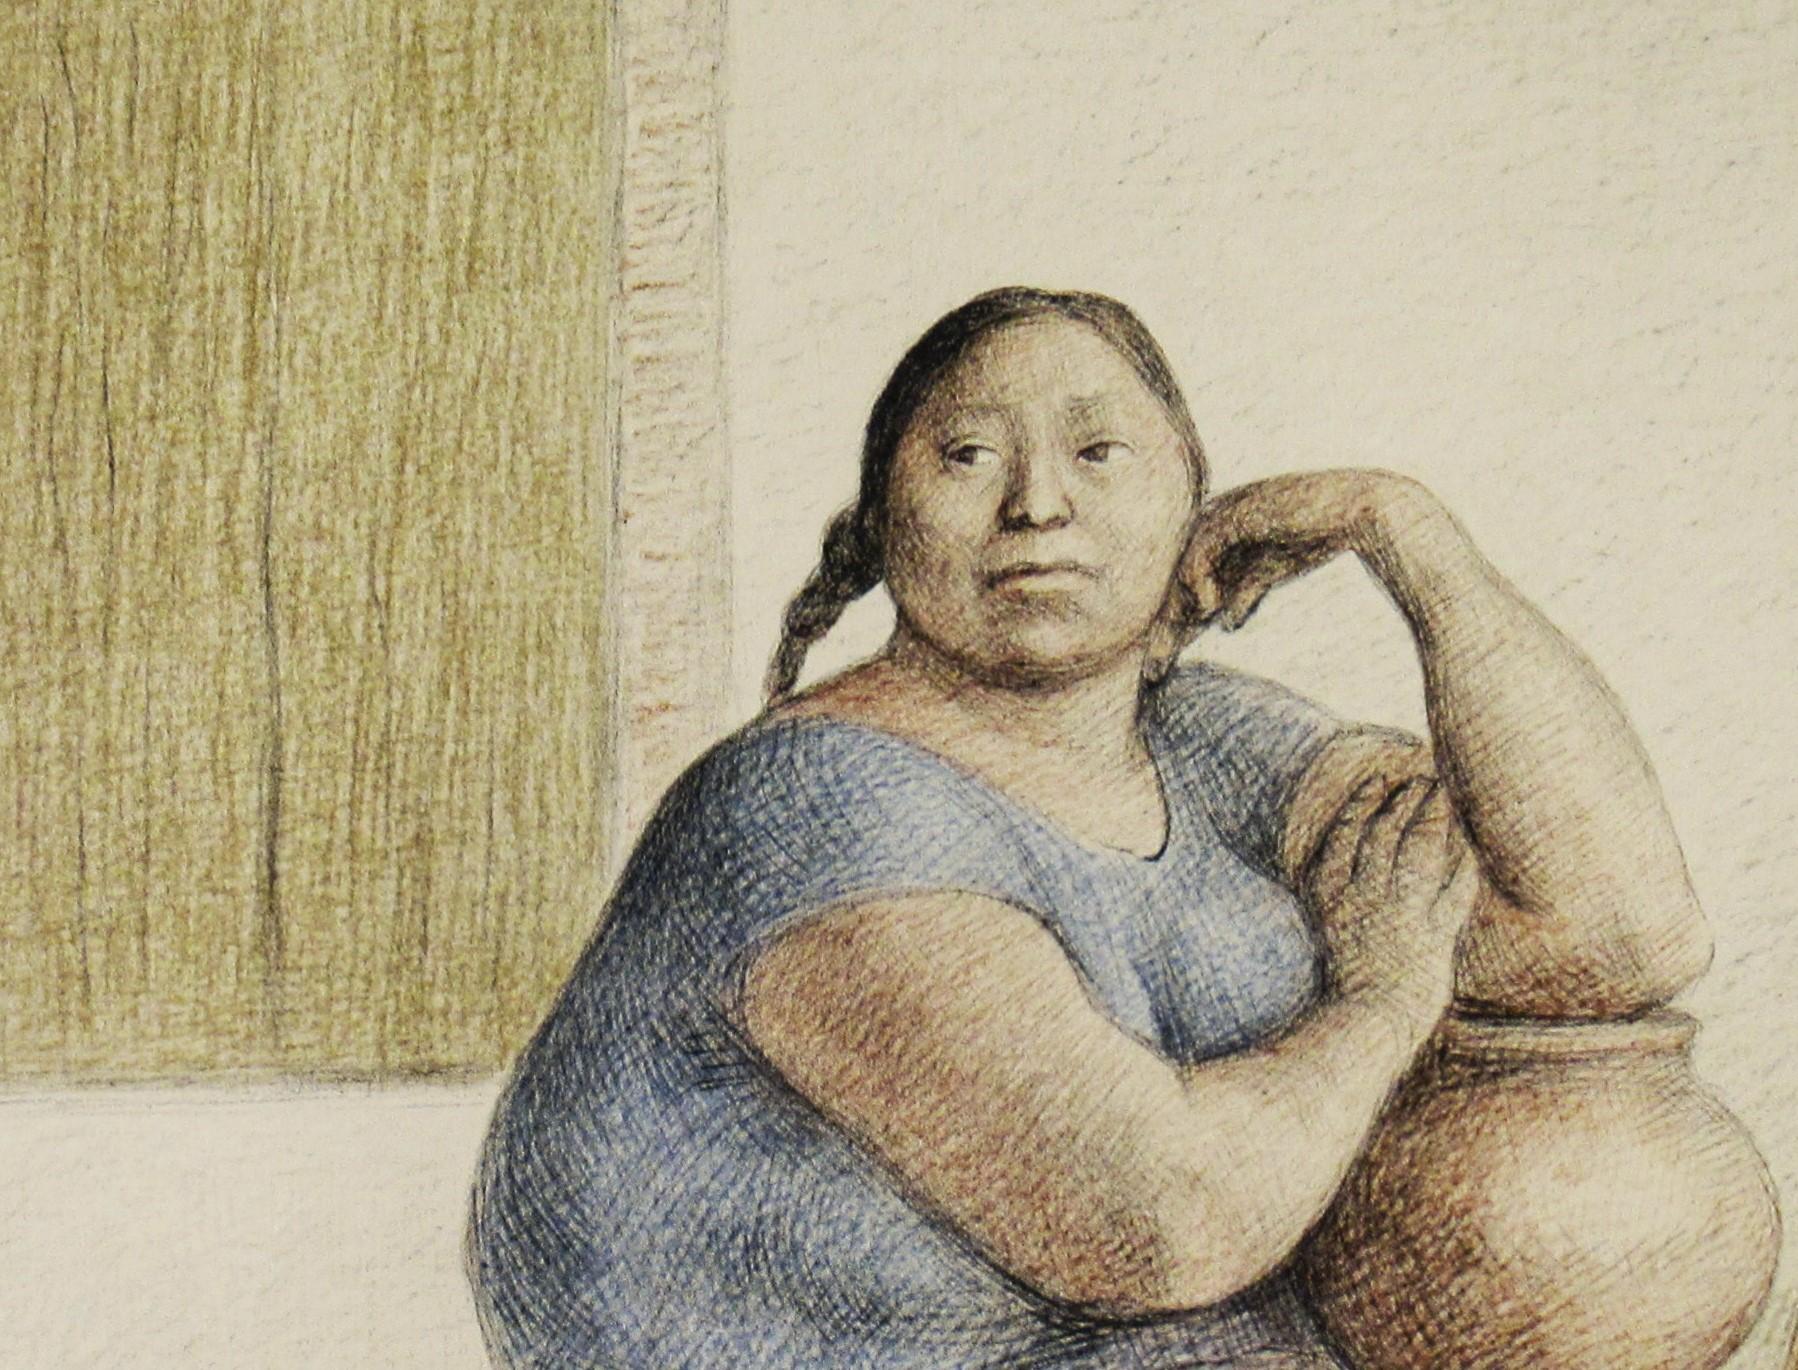 Le Platicando de Juchiteca (Femmes juchécoises discutant) - Marron Figurative Print par Francisco Zúñiga